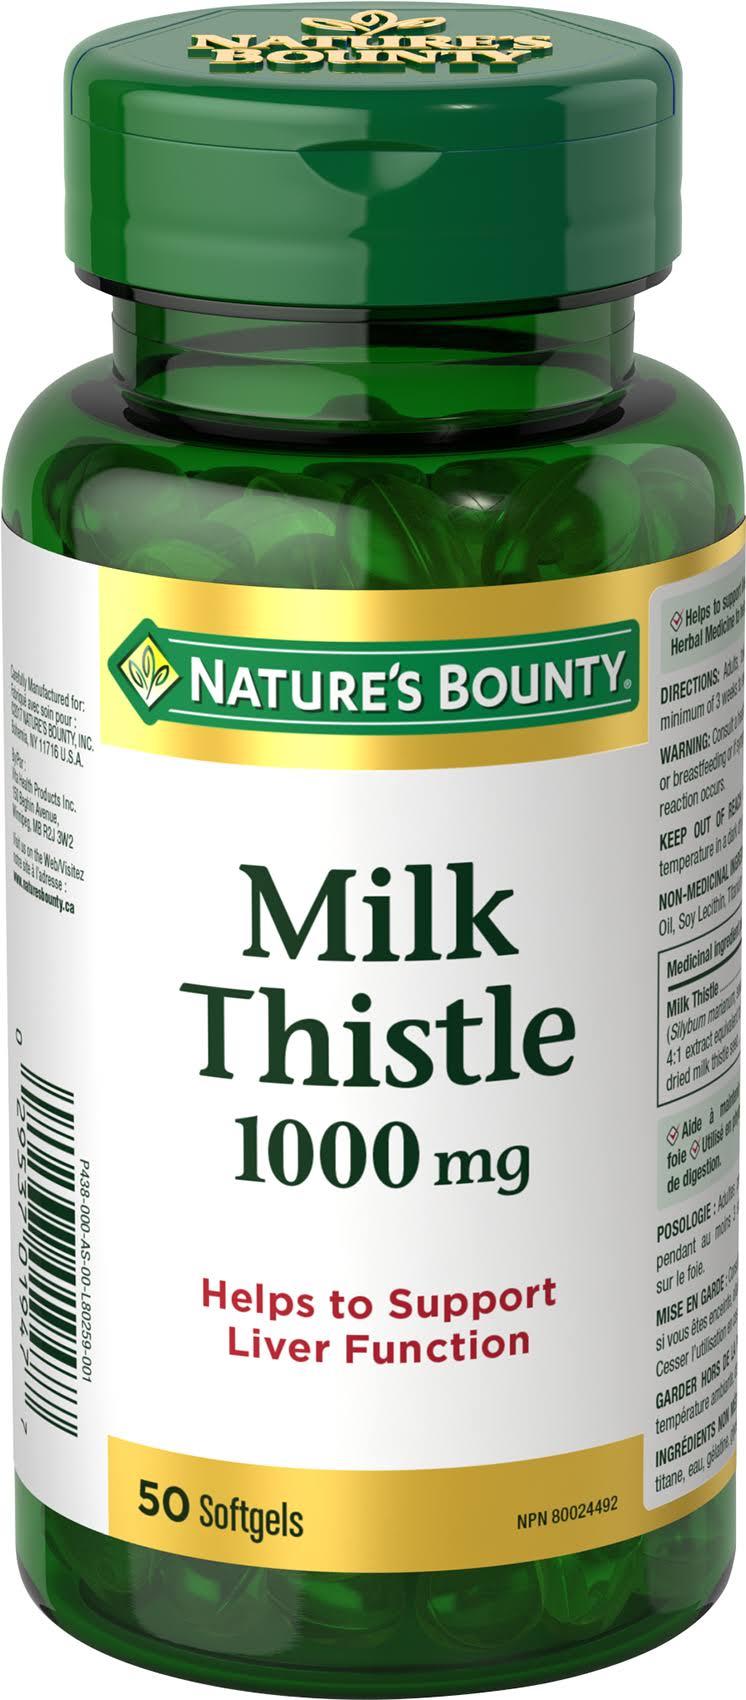 Nature's Bounty Milk Thistle Supplement - 50ct